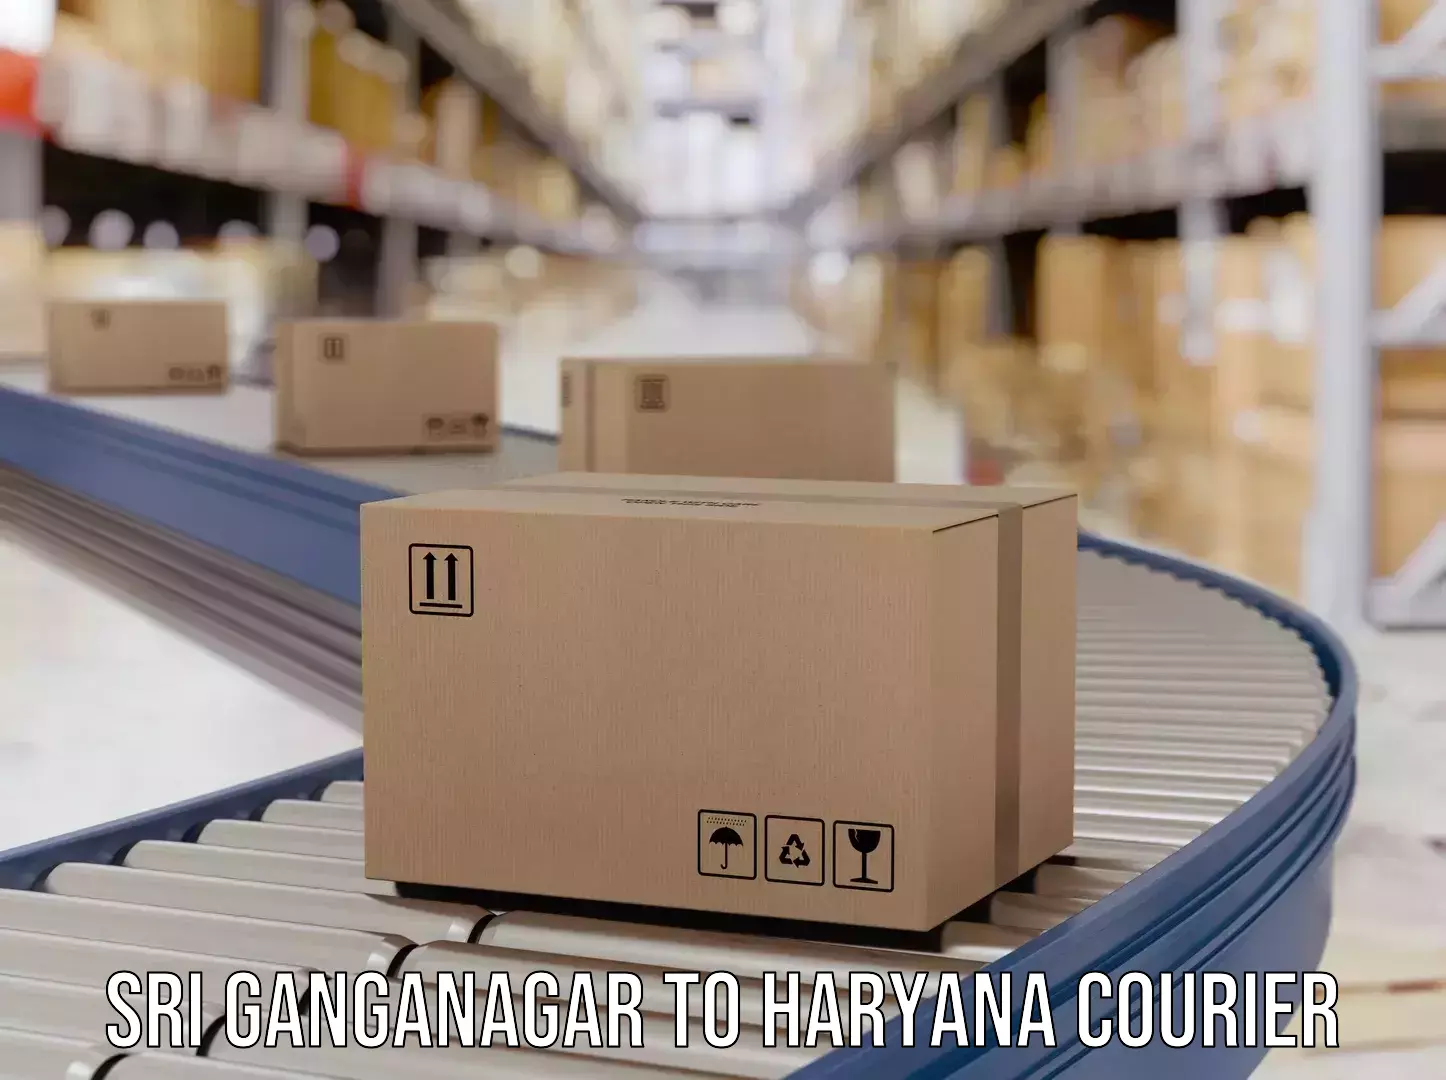 Courier service partnerships Sri Ganganagar to Loharu